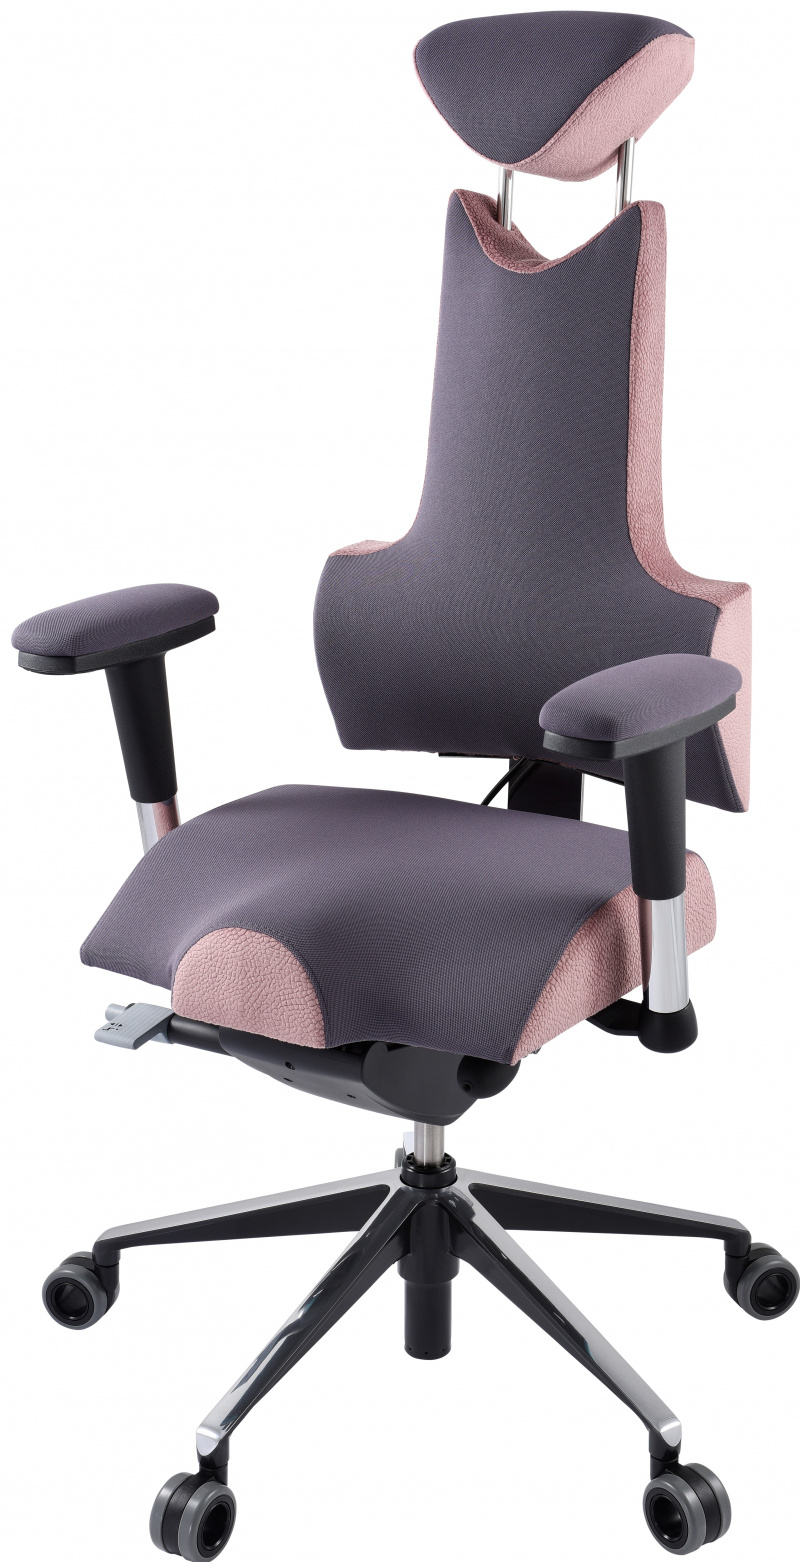 terapeutická židle THERAPIA ENERGY S COM 1510, černá